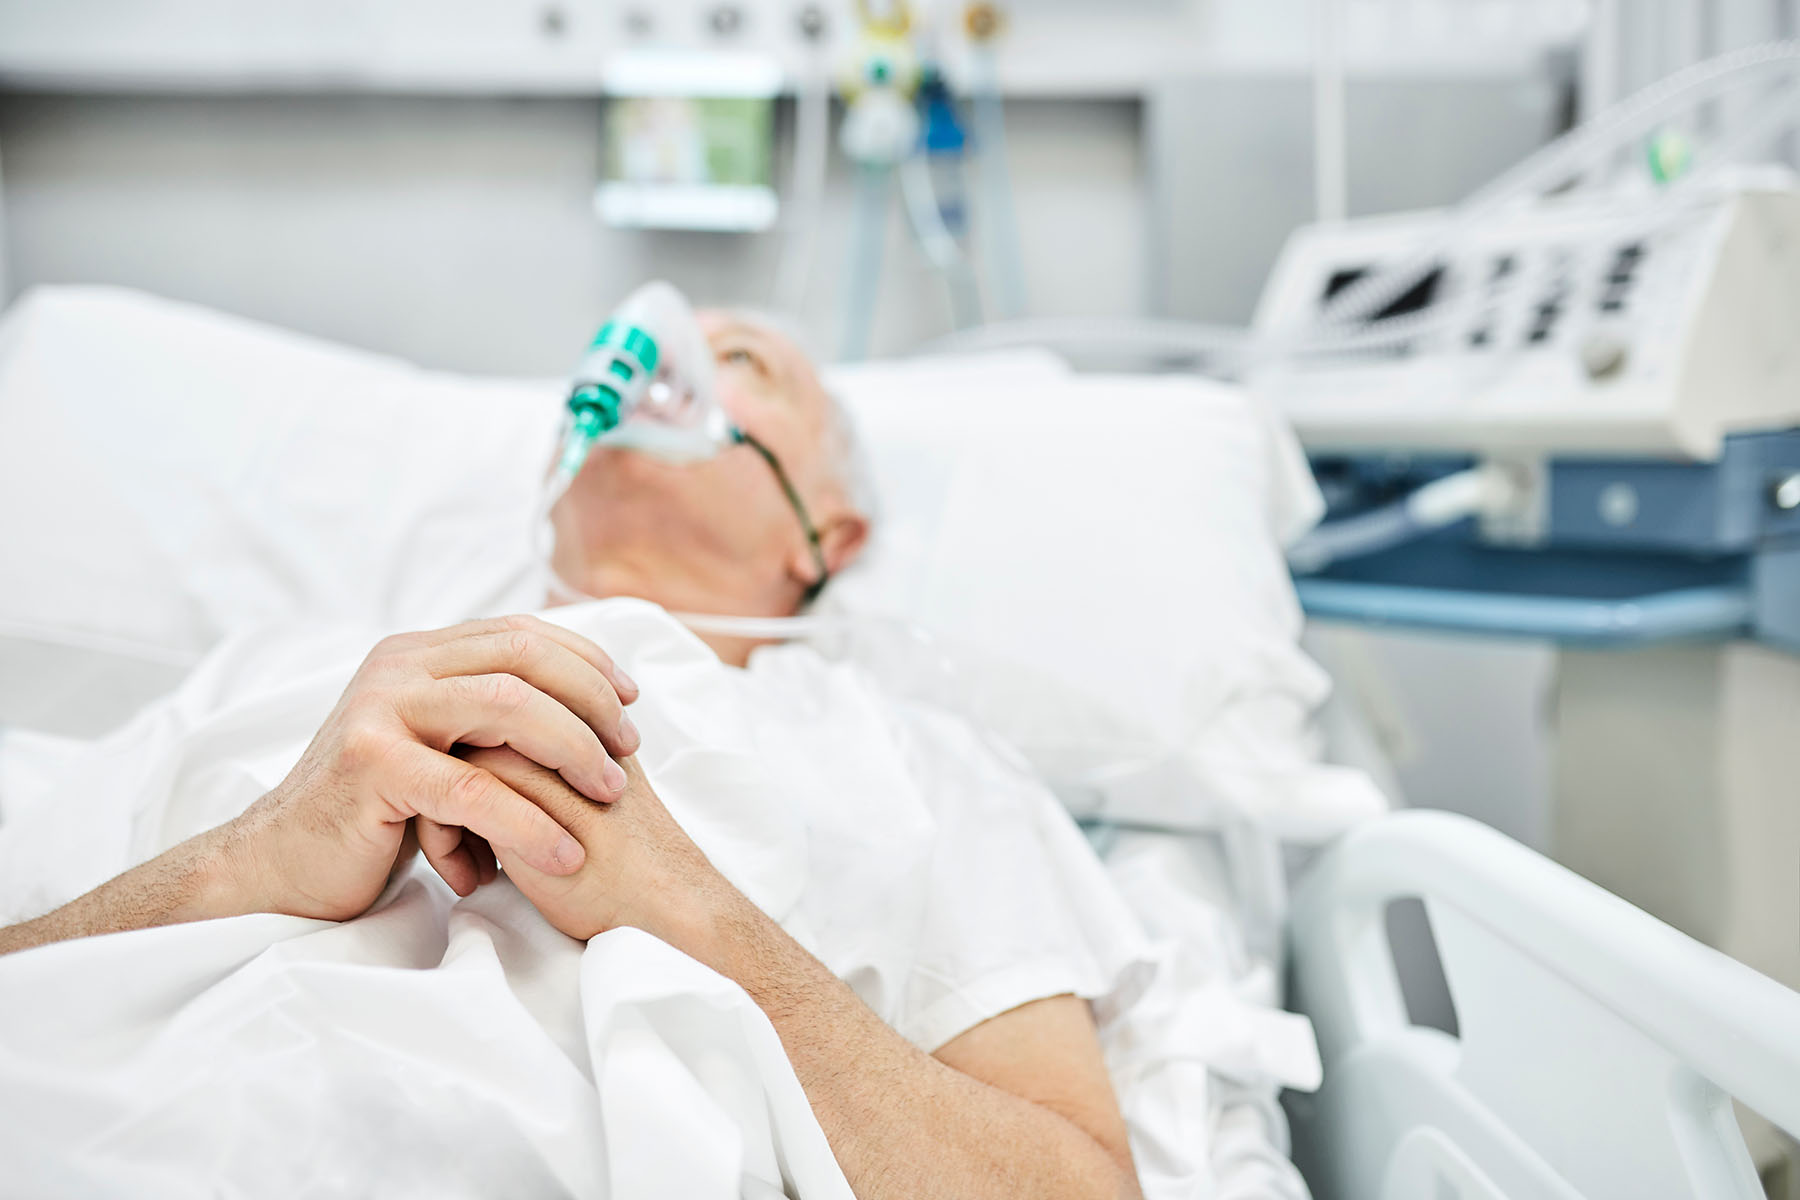 Elderly man lying on hospital bed with oxygen mask on